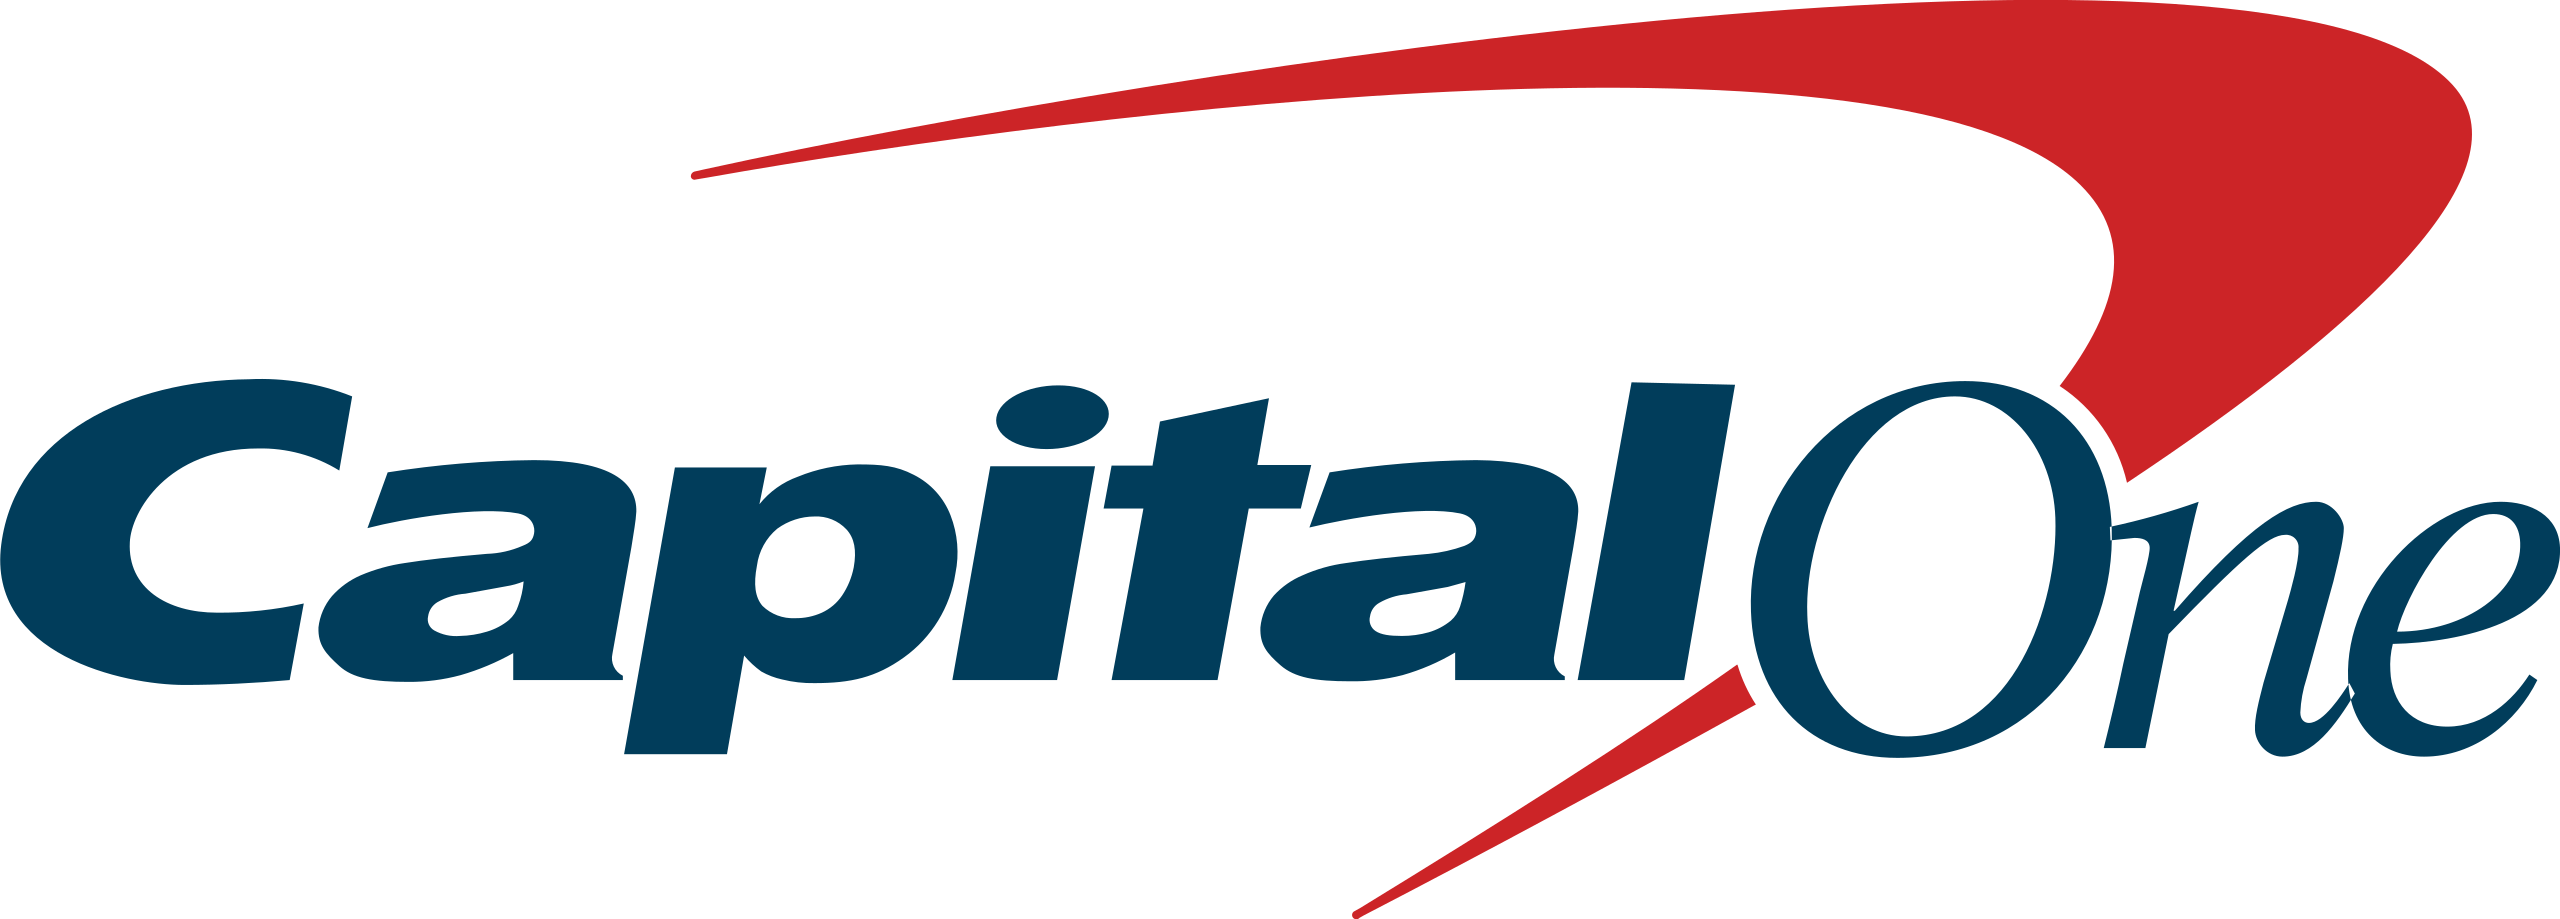 Capital_One_logo.svg